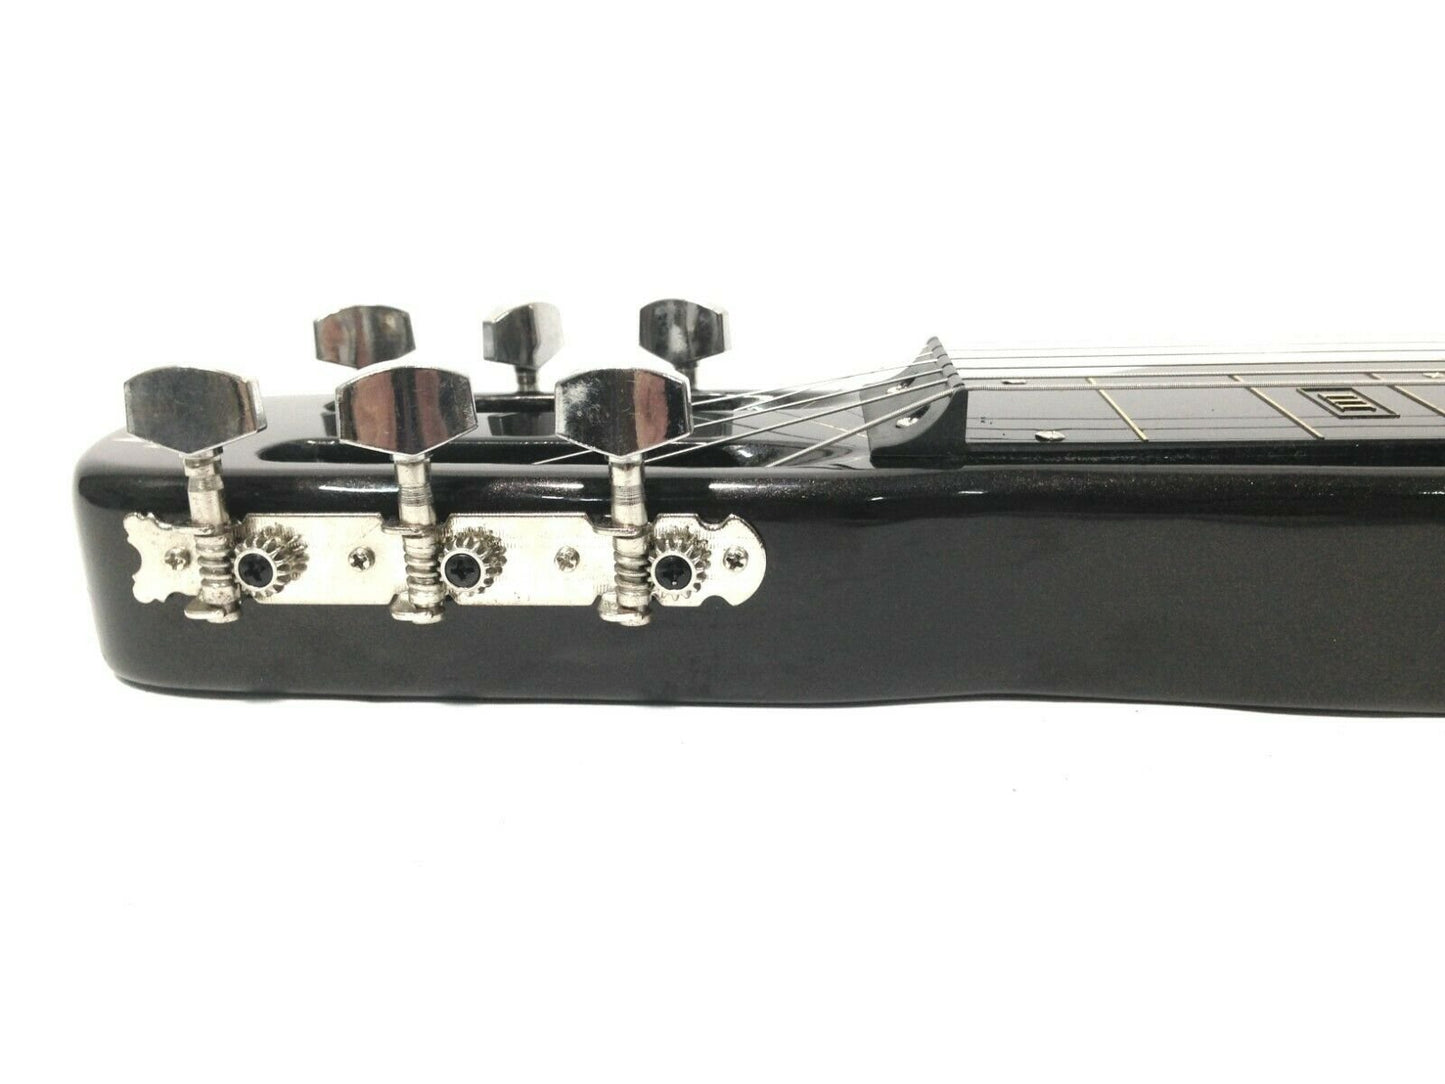 Haze Lap Steel Single Coil Height Adjustable Lap Steel Electric Guitar - Black HSLT1930BK